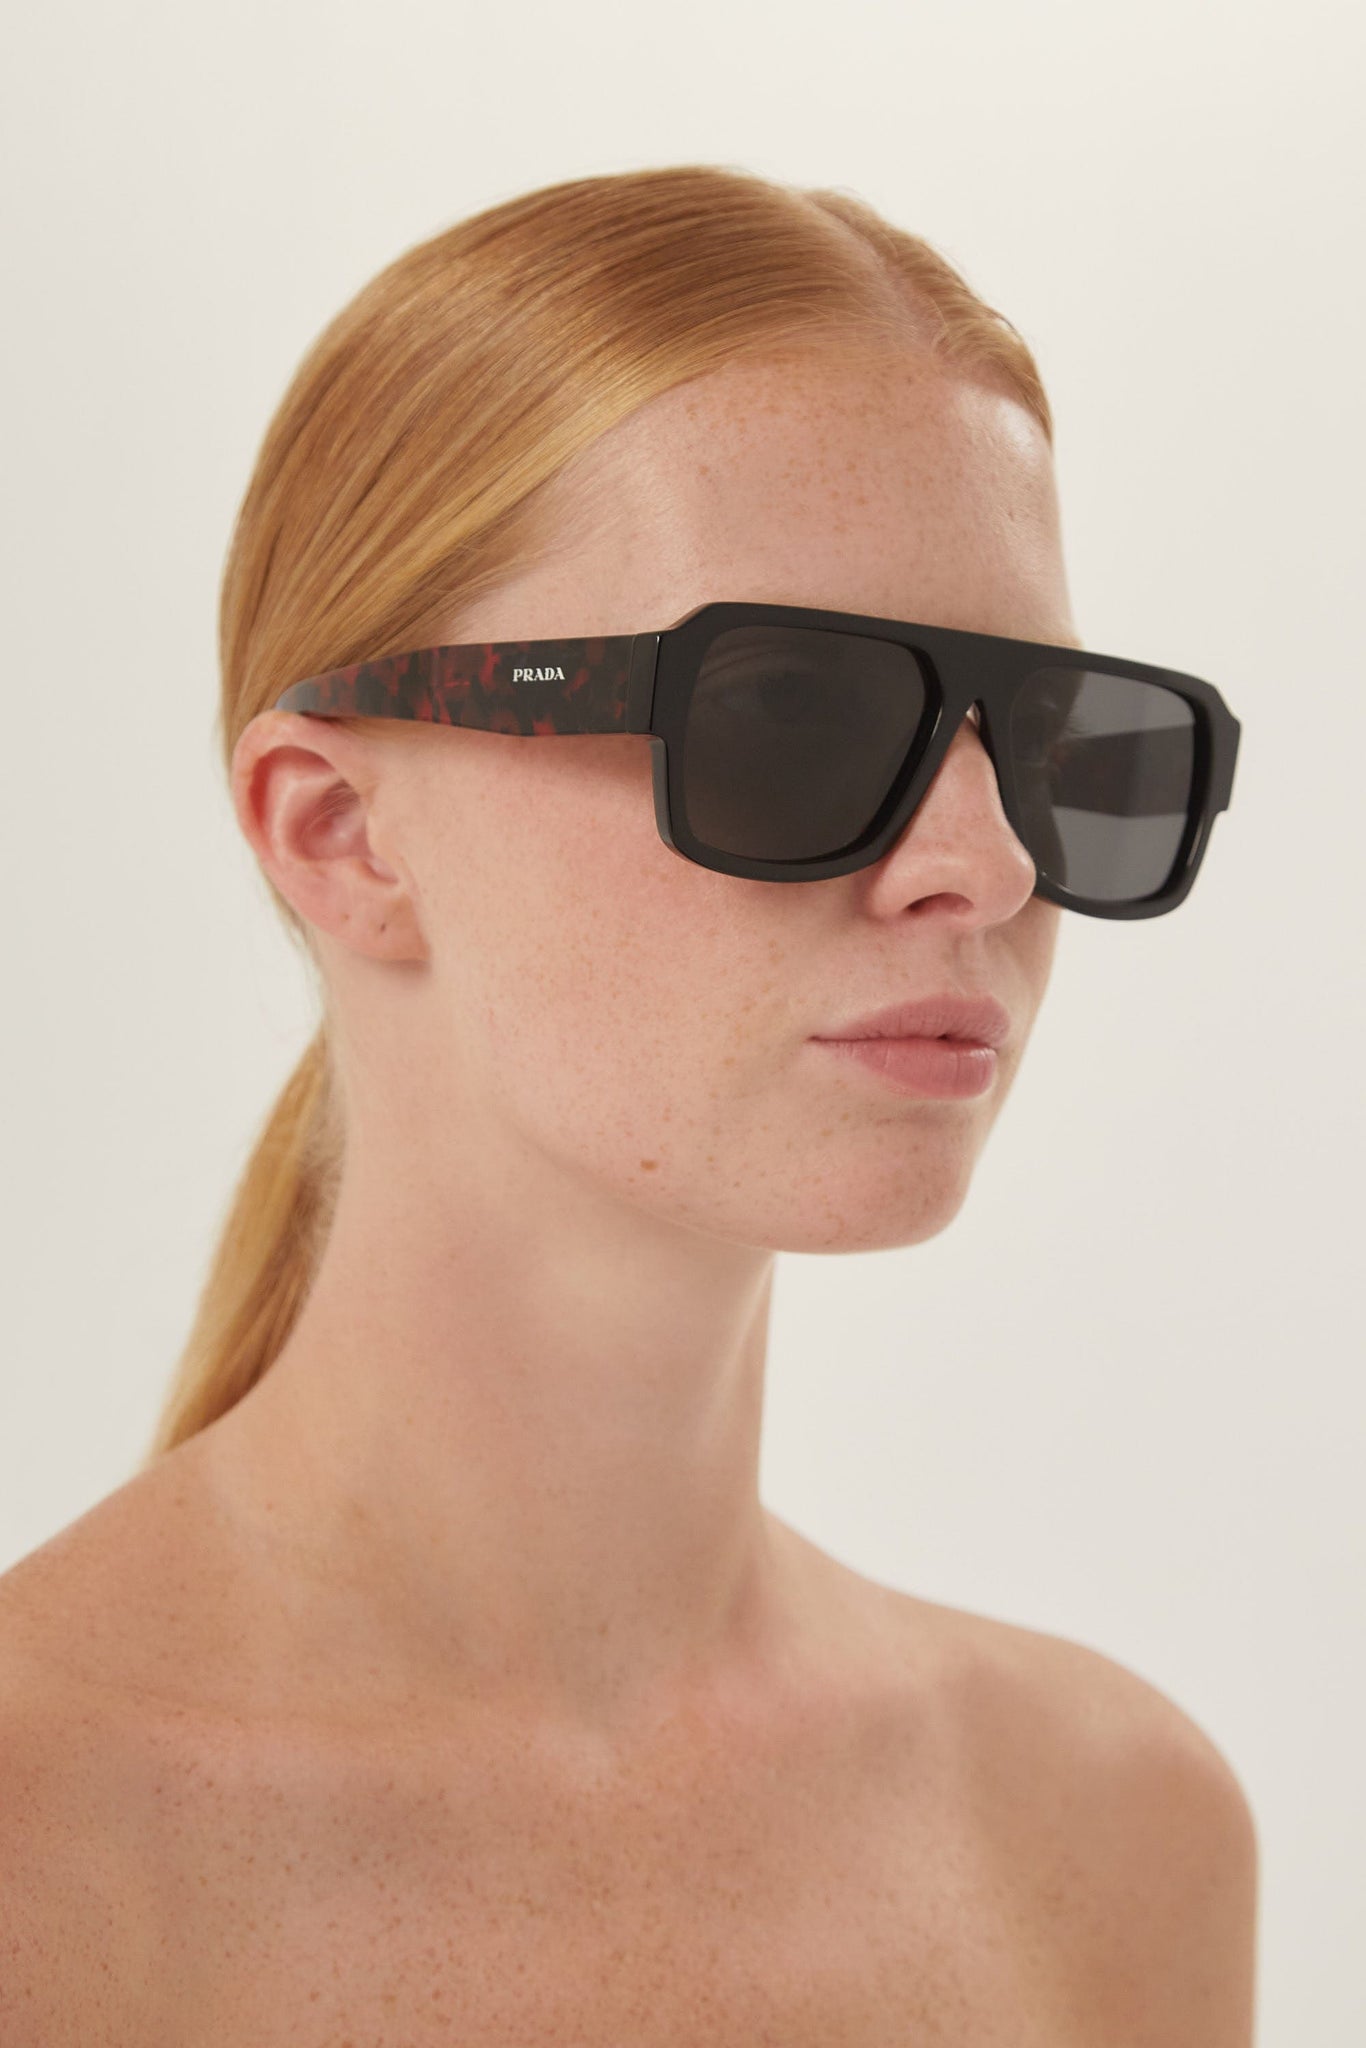 Top 67+ imagen prada flat top sunglasses